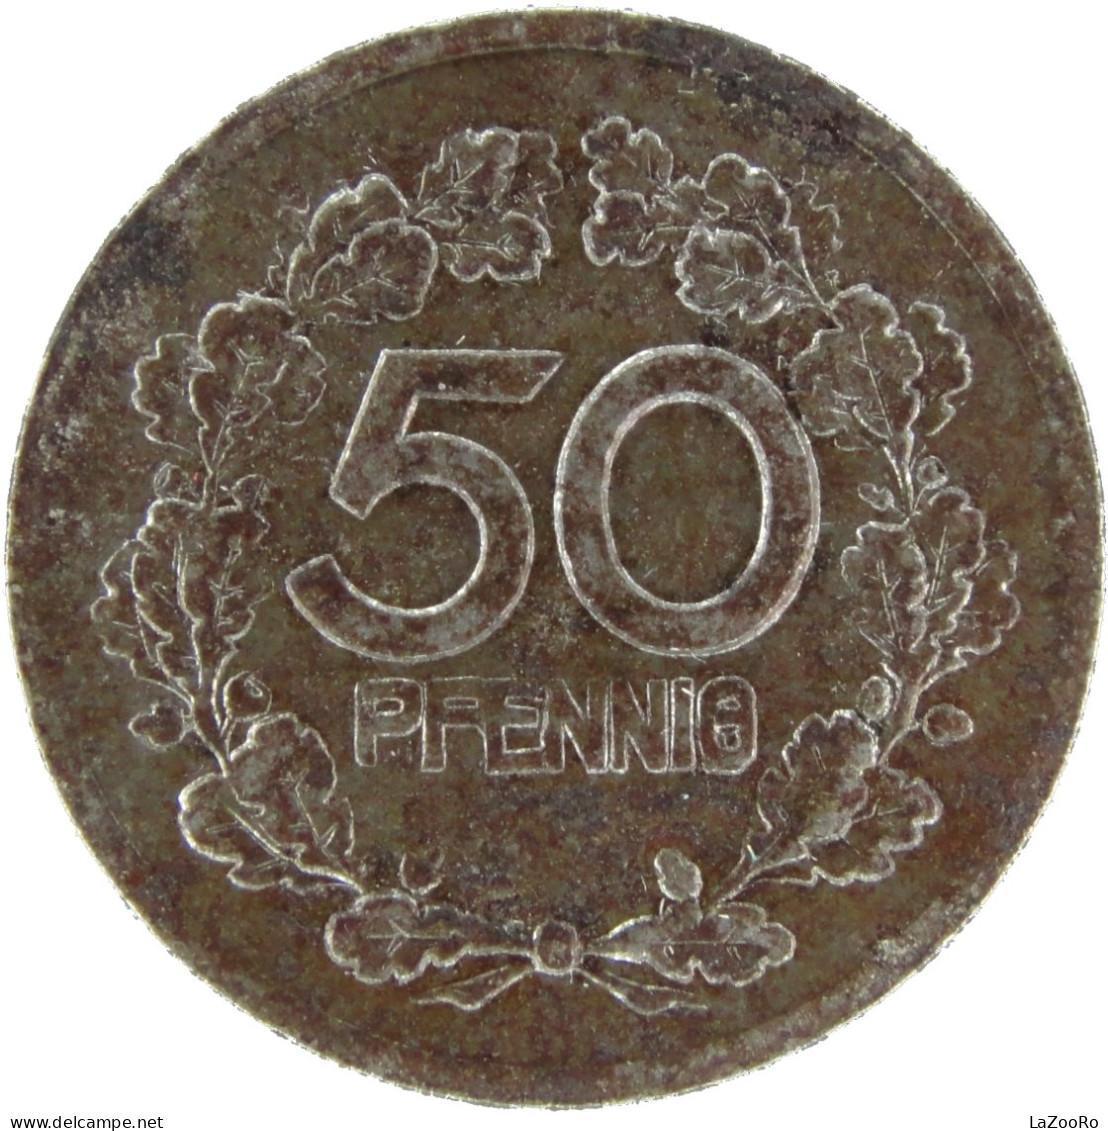 LaZooRo: Germany Wohwinkel 50 Pfennig 1918 XF - Monetary/Of Necessity